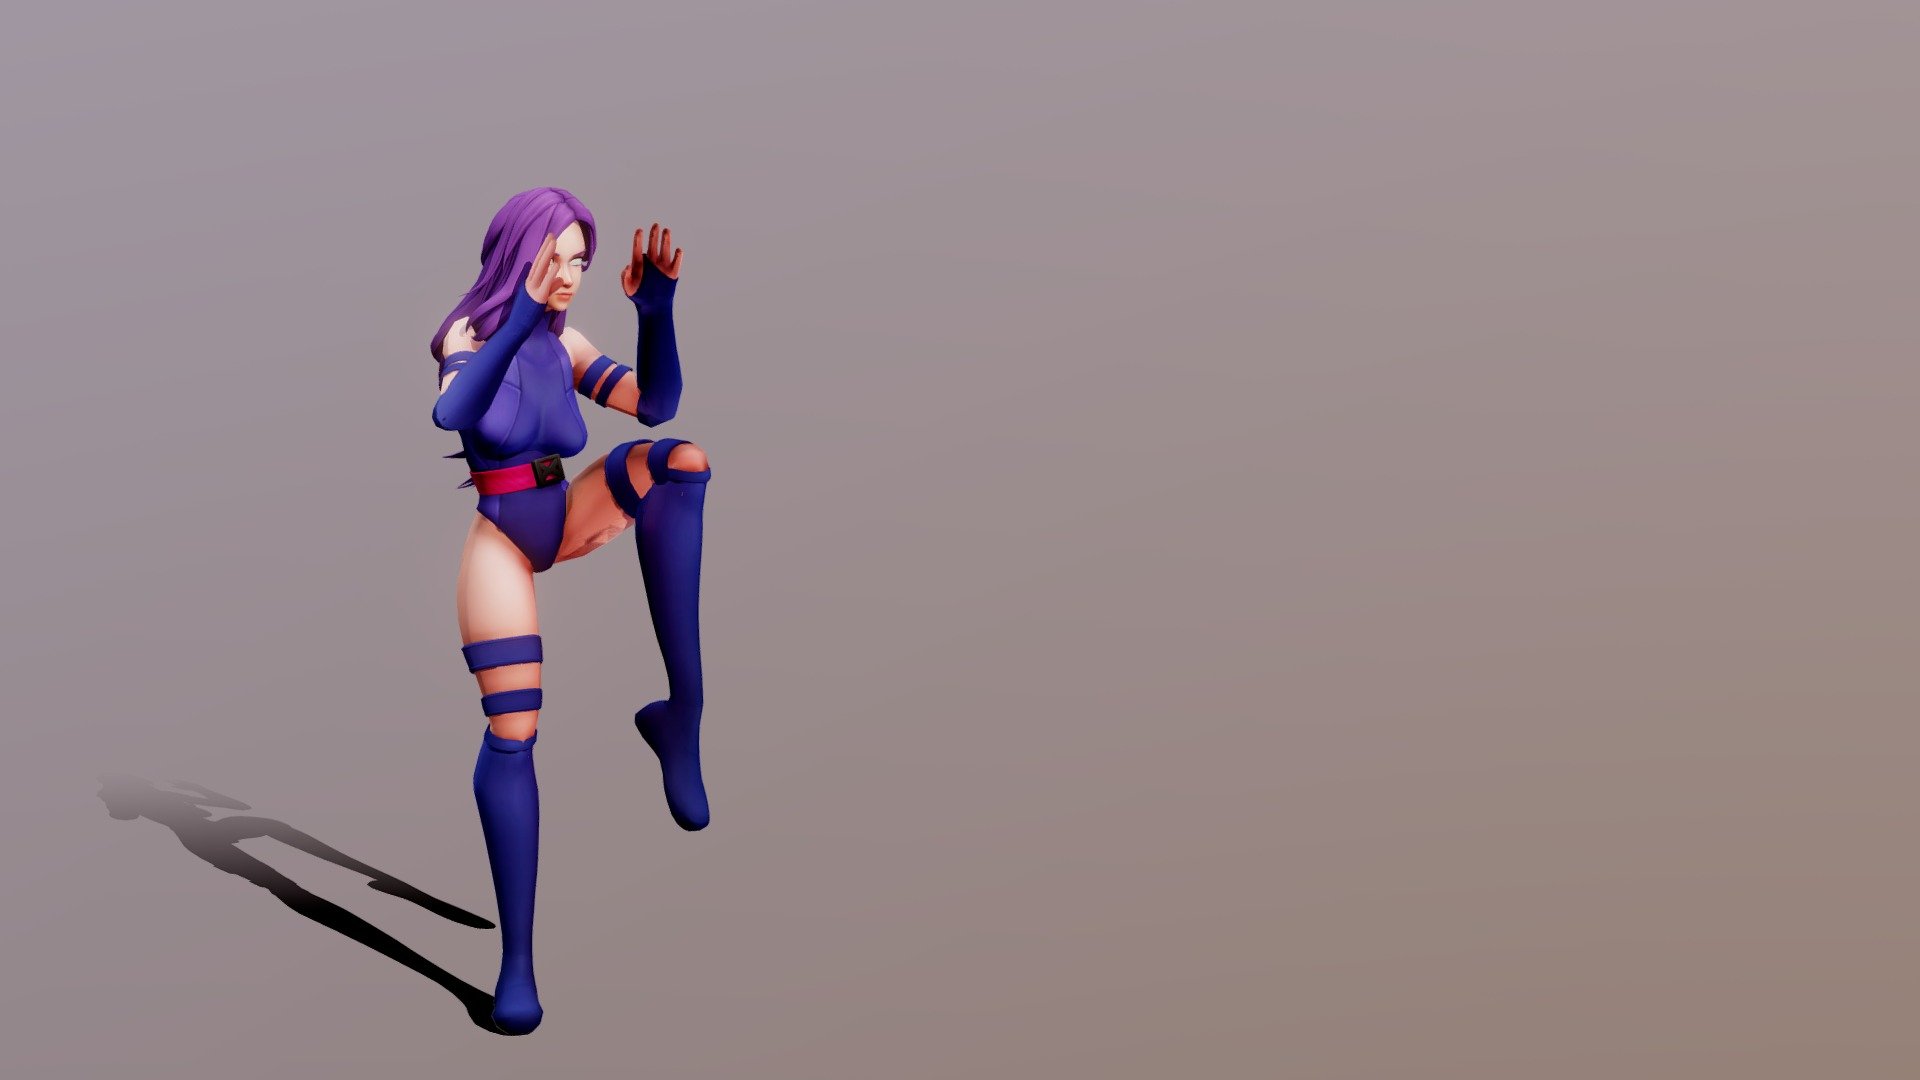 [WIP]

Short character intro/emote animation

Eye .mat coming soonTM 

Psylocke Rig by Truong CG Artist - Psylocke Fighting Intro - 3D model by Toby Dart (@tobydart) 3d model